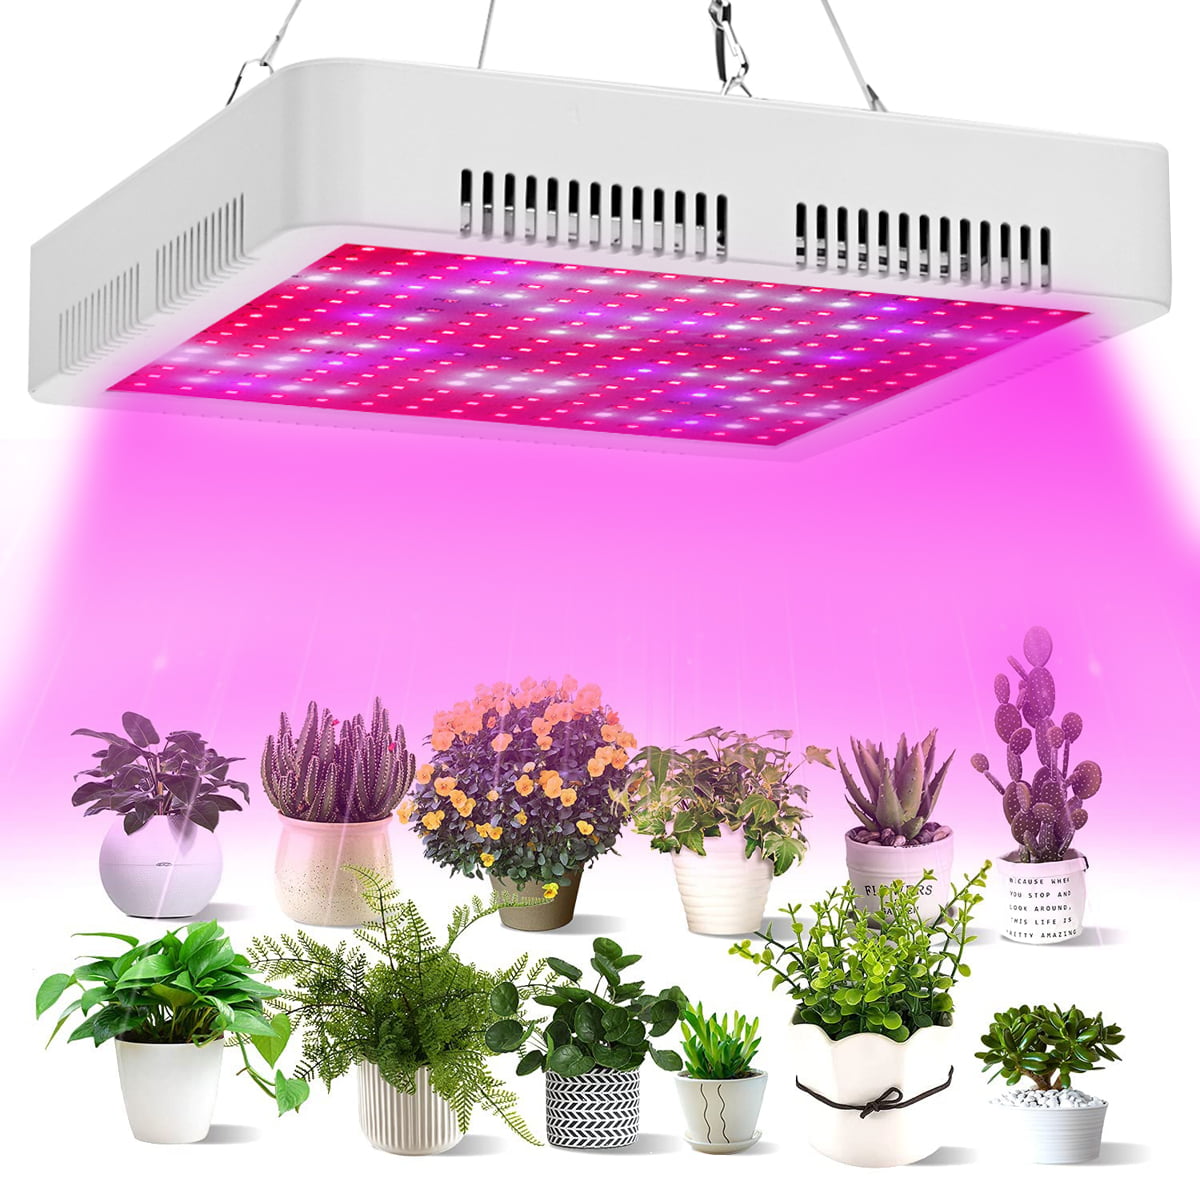 1000W LED Grow Light Bulb Plant Lamp Panel for Indoor Hydroponic Flower Veg 1PC 